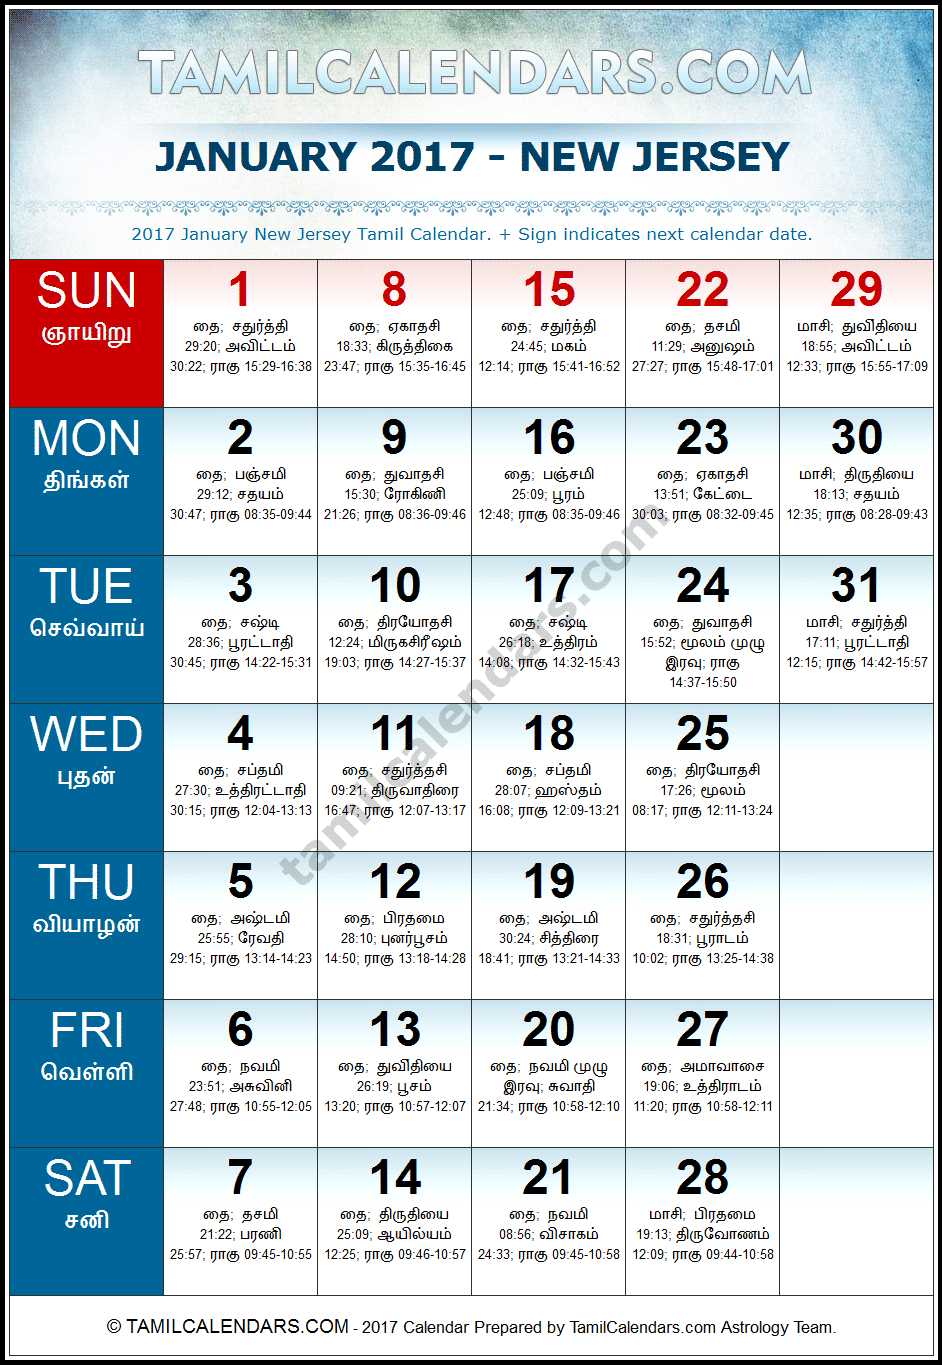 January 2017 Tamil Calendar for New Jersey, USA